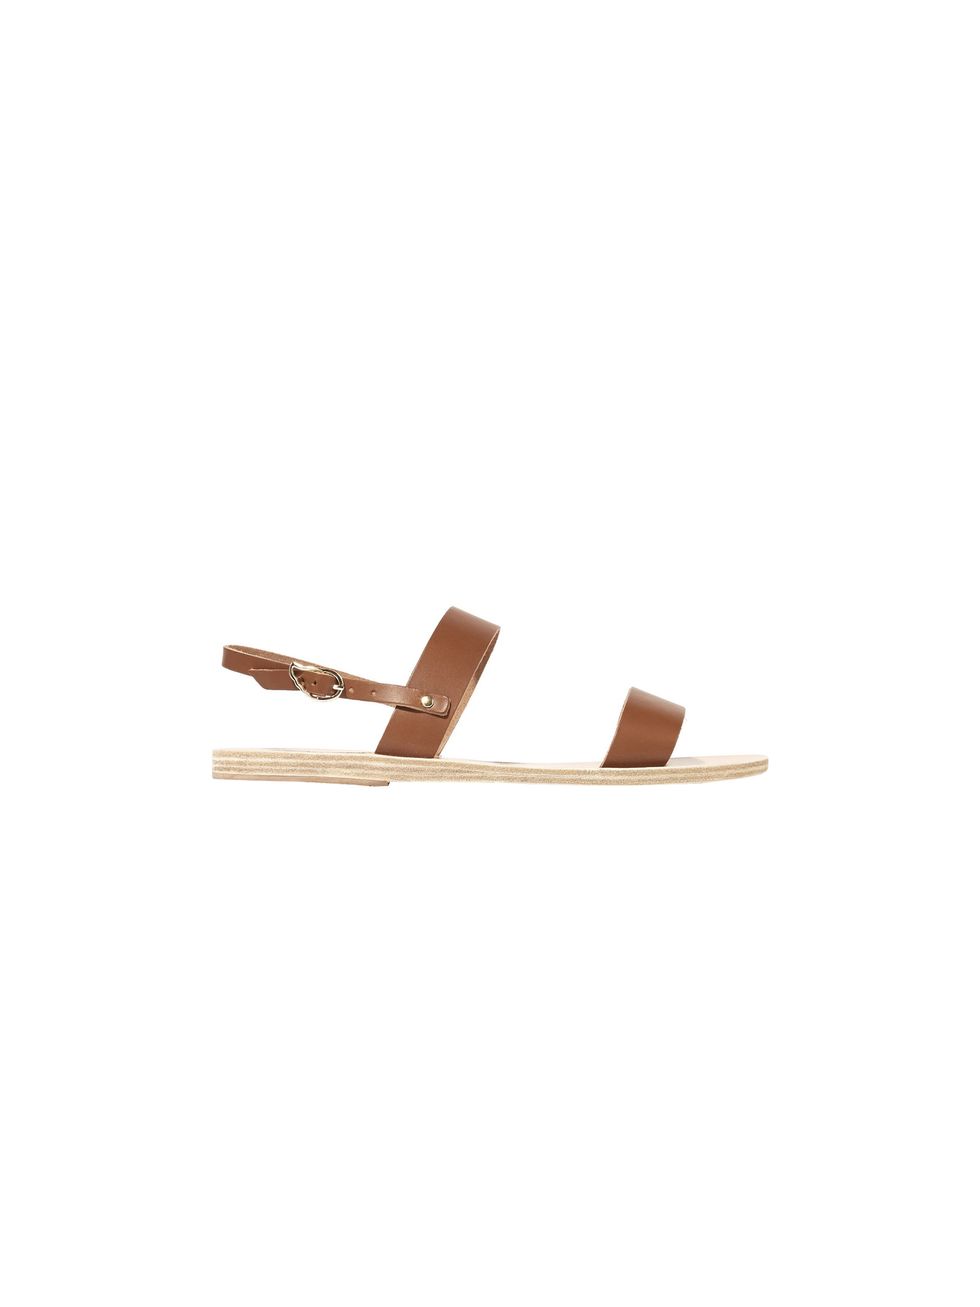 ancient-greek-sandals-1521670844.jpg